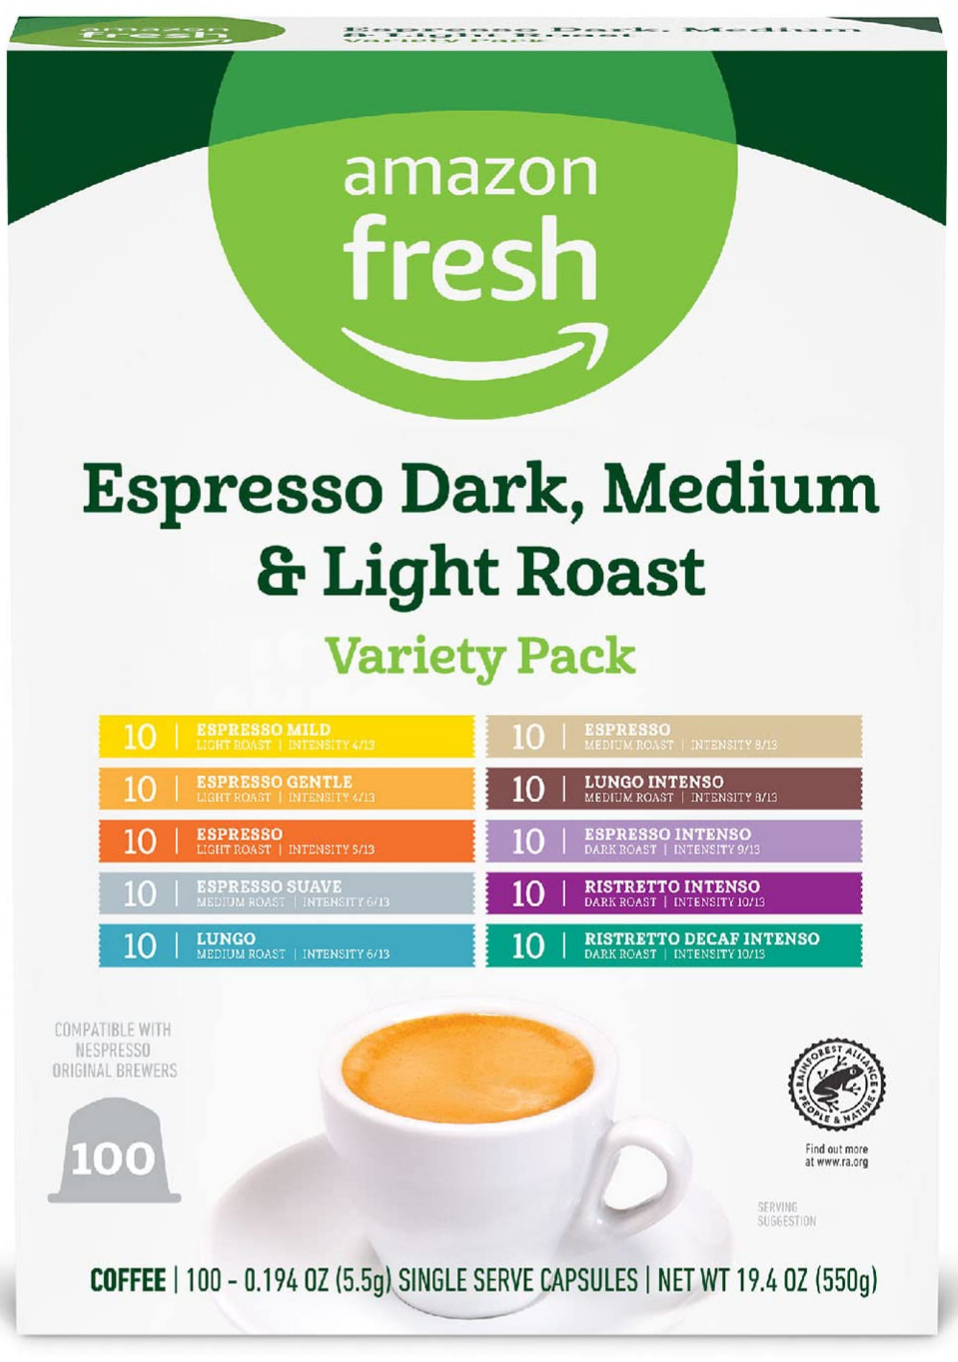 Amazon Fresh Espresso Dark, Medium & Light Roast Aluminum Capsules Nespresso Original pods, Variety Pack, 100 Count $18.11 Amazon S&S YMMV